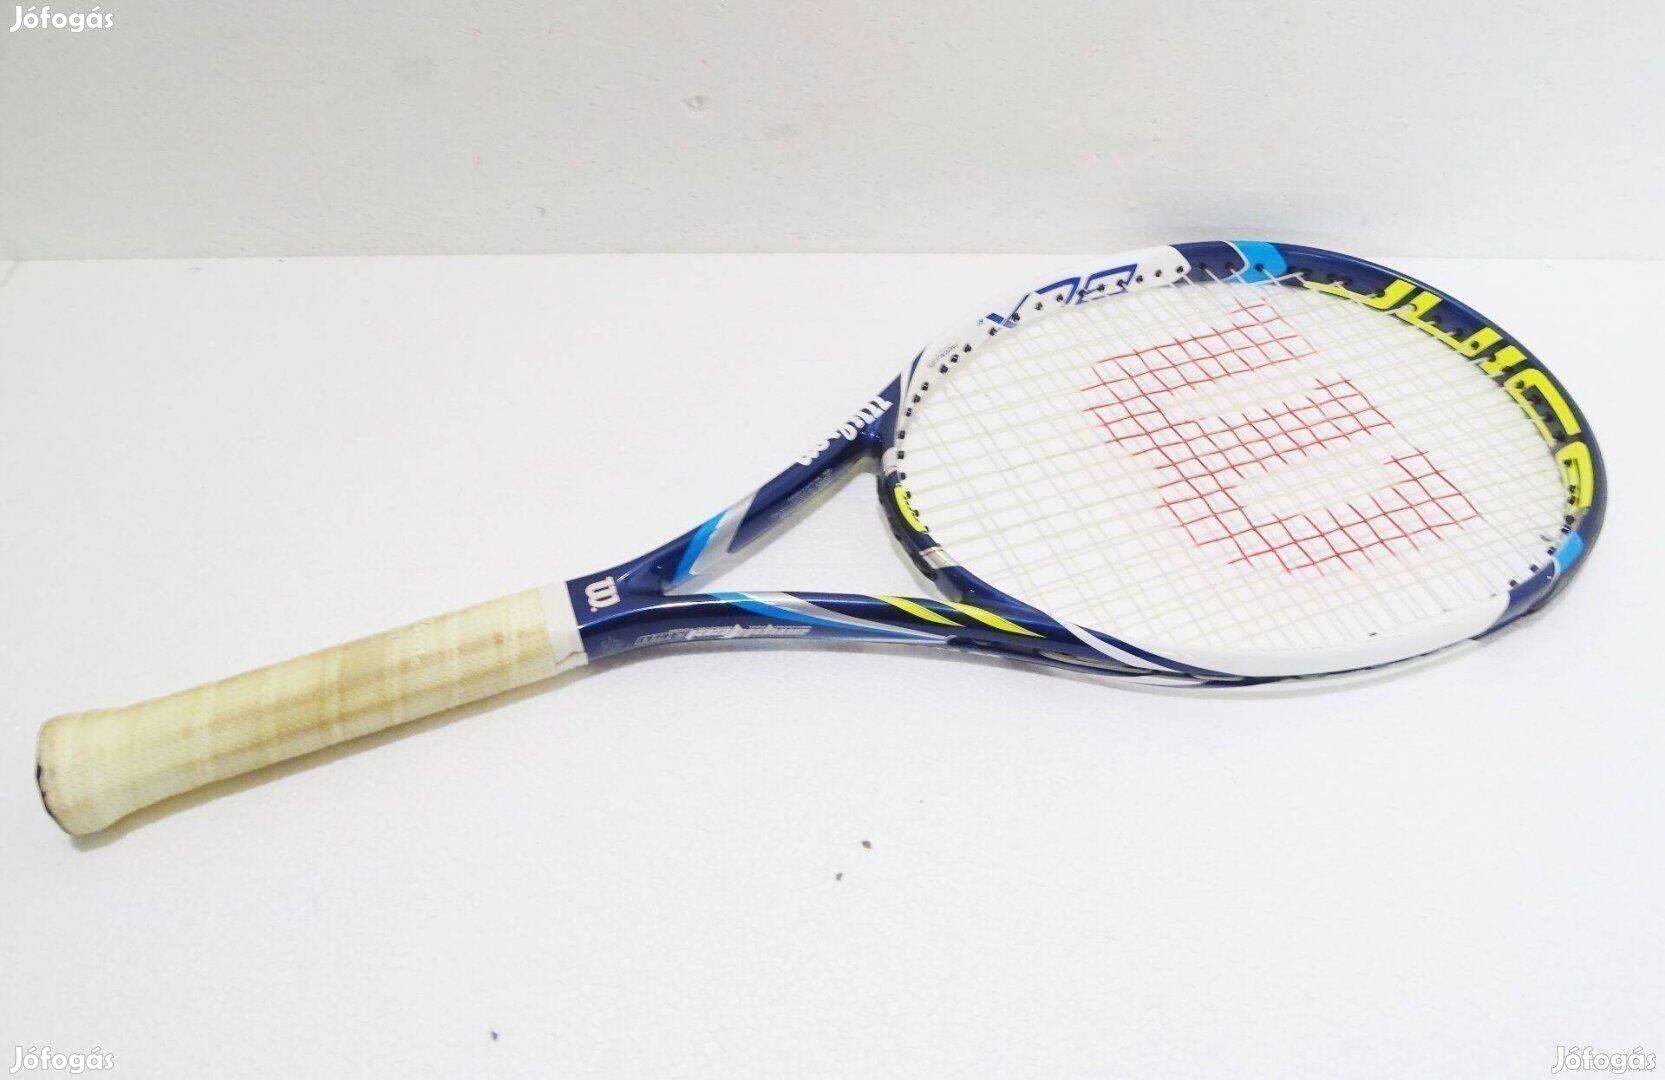 Wilson Juice 100 Amplifeel 360 teniszütő tenisz ütő kék